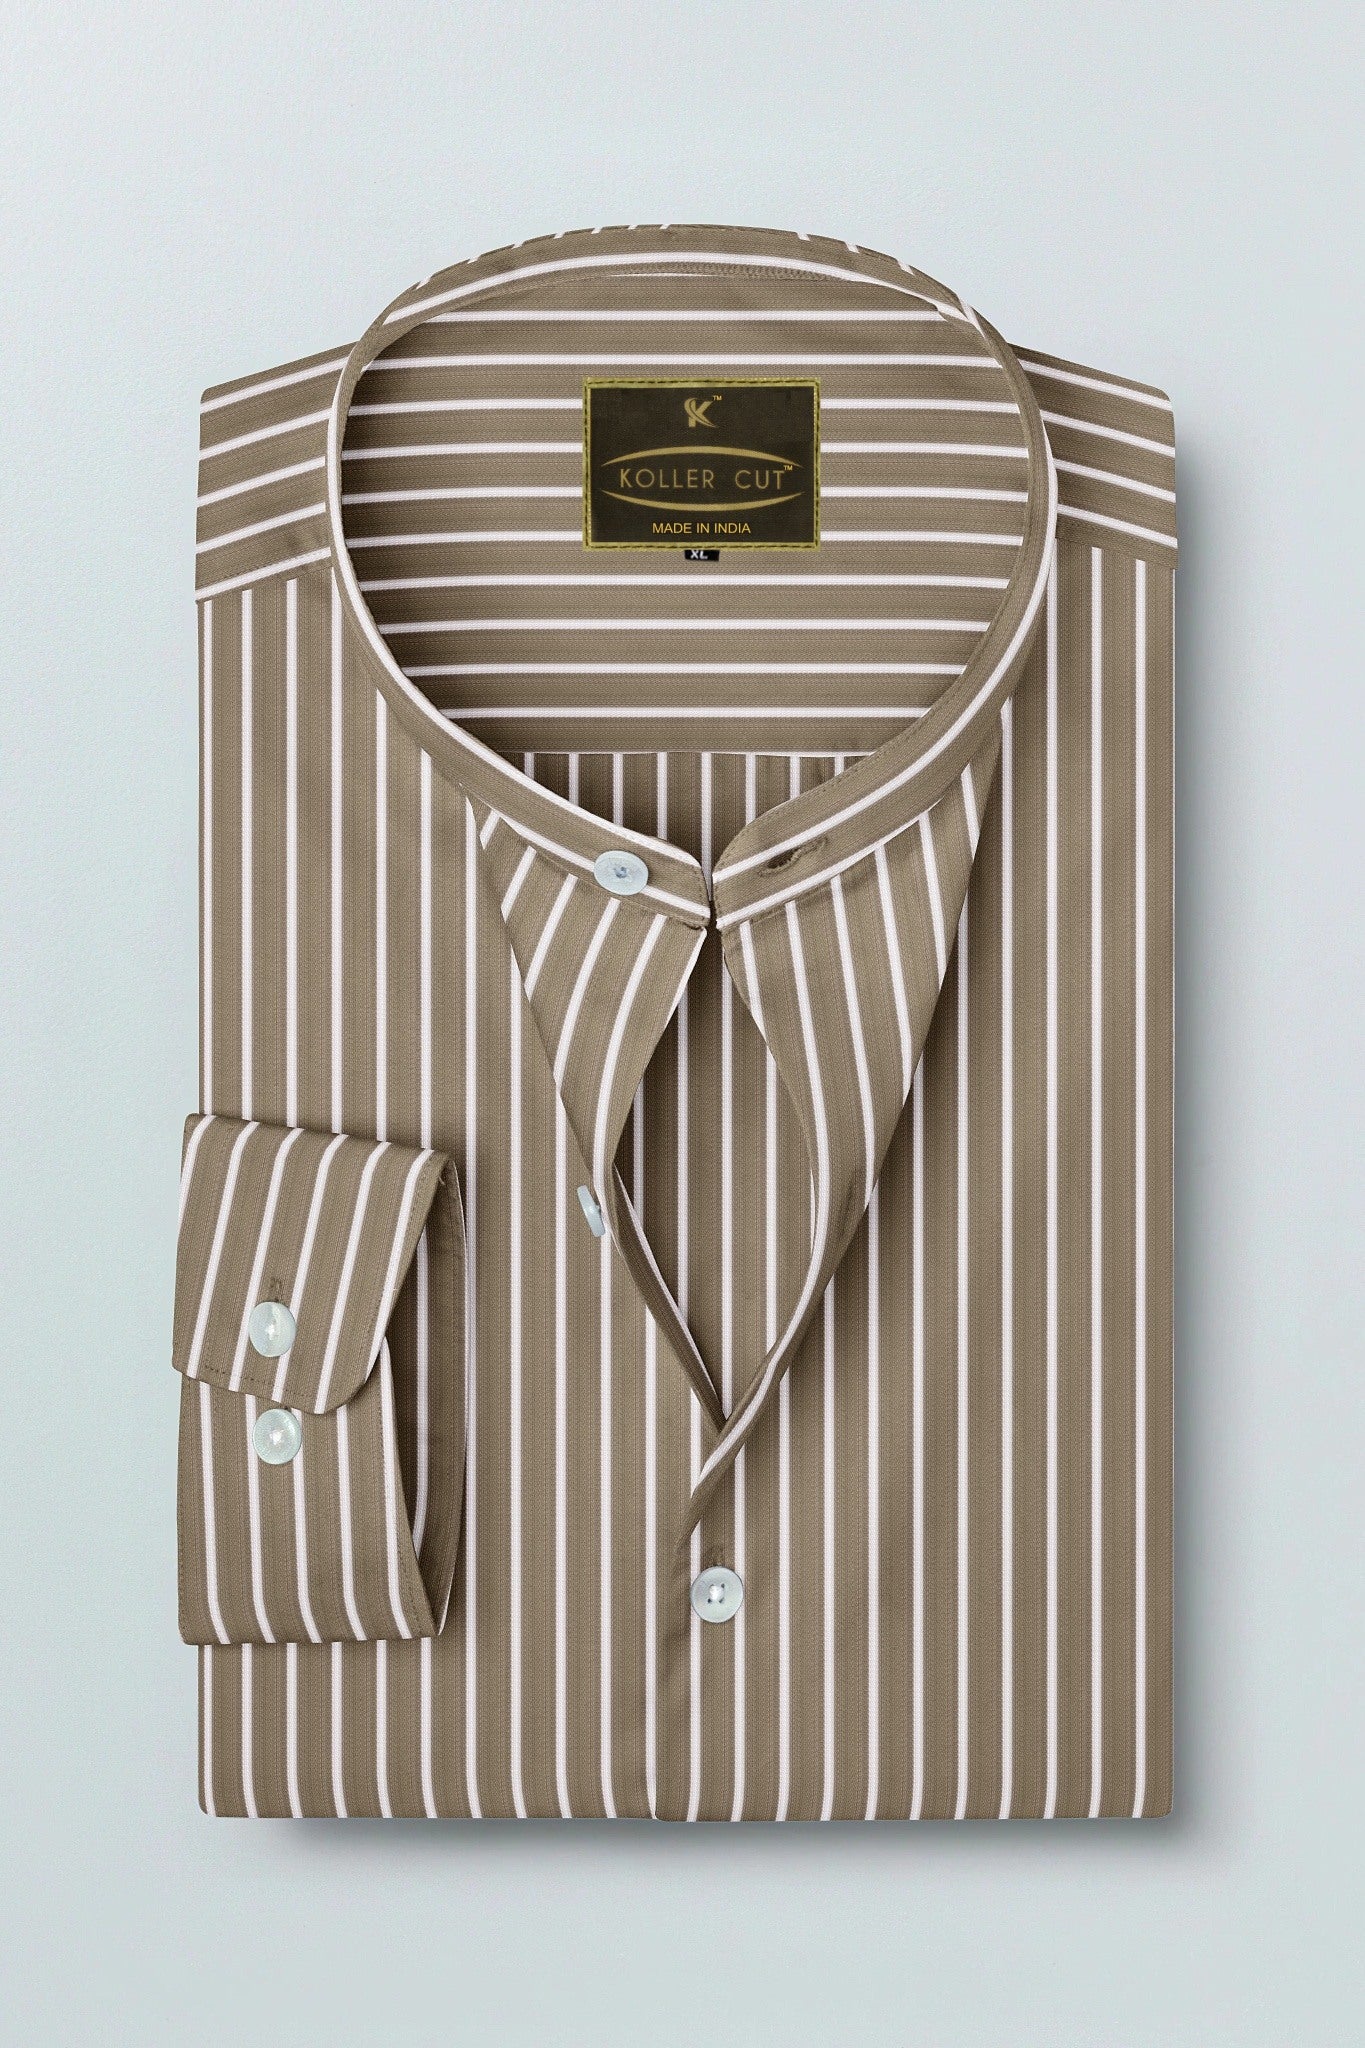 Tortilla Brown and White Mandarin Collar Pinstripes Men's Cotton Shirt